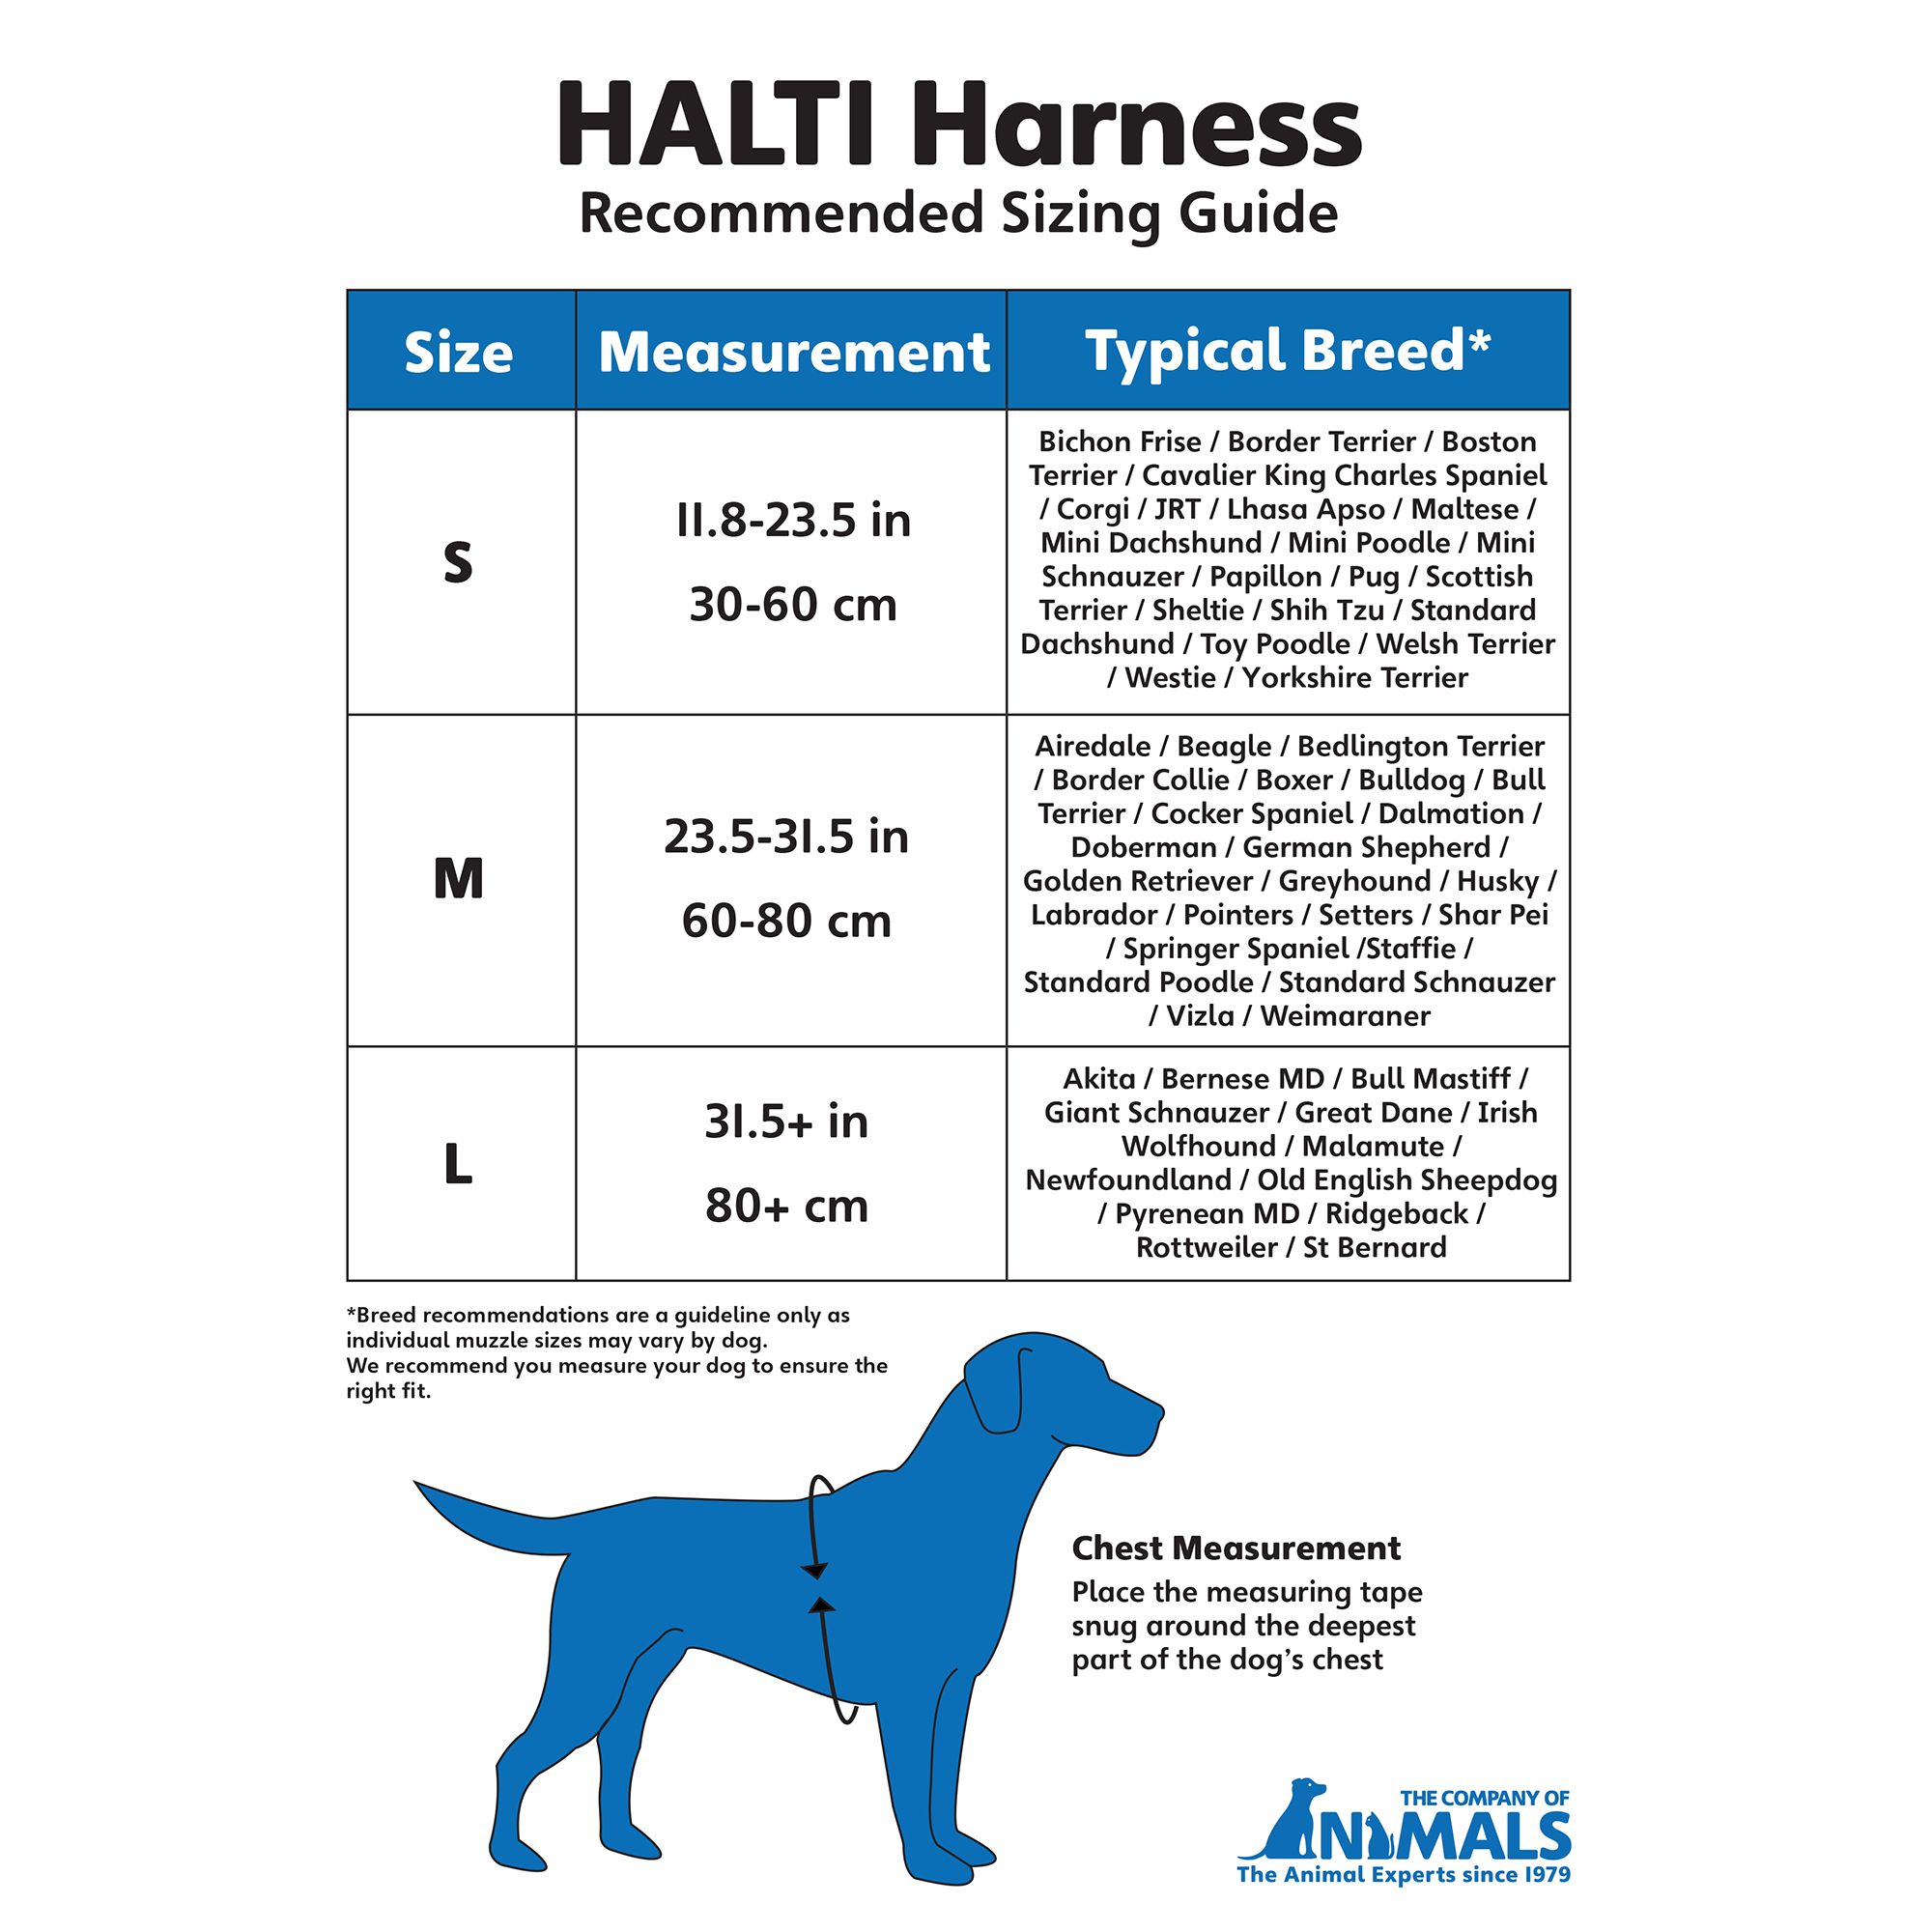 halti training harness